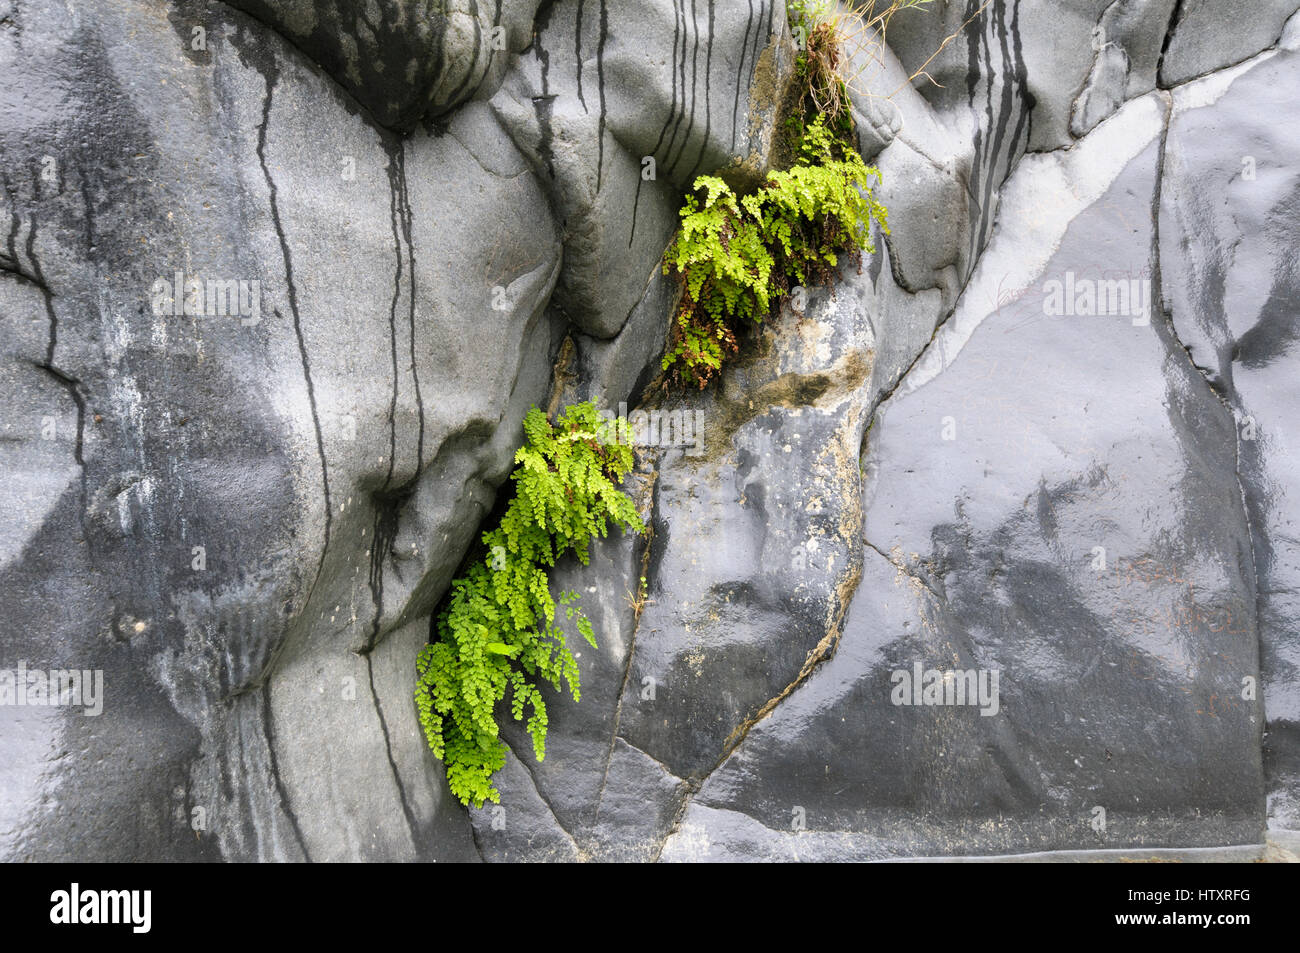 Maidenhair fern (Adiantum Raddianum) growing wild in basalt rocks, Alcantara Gorge, Sicily, Italy Stock Photo